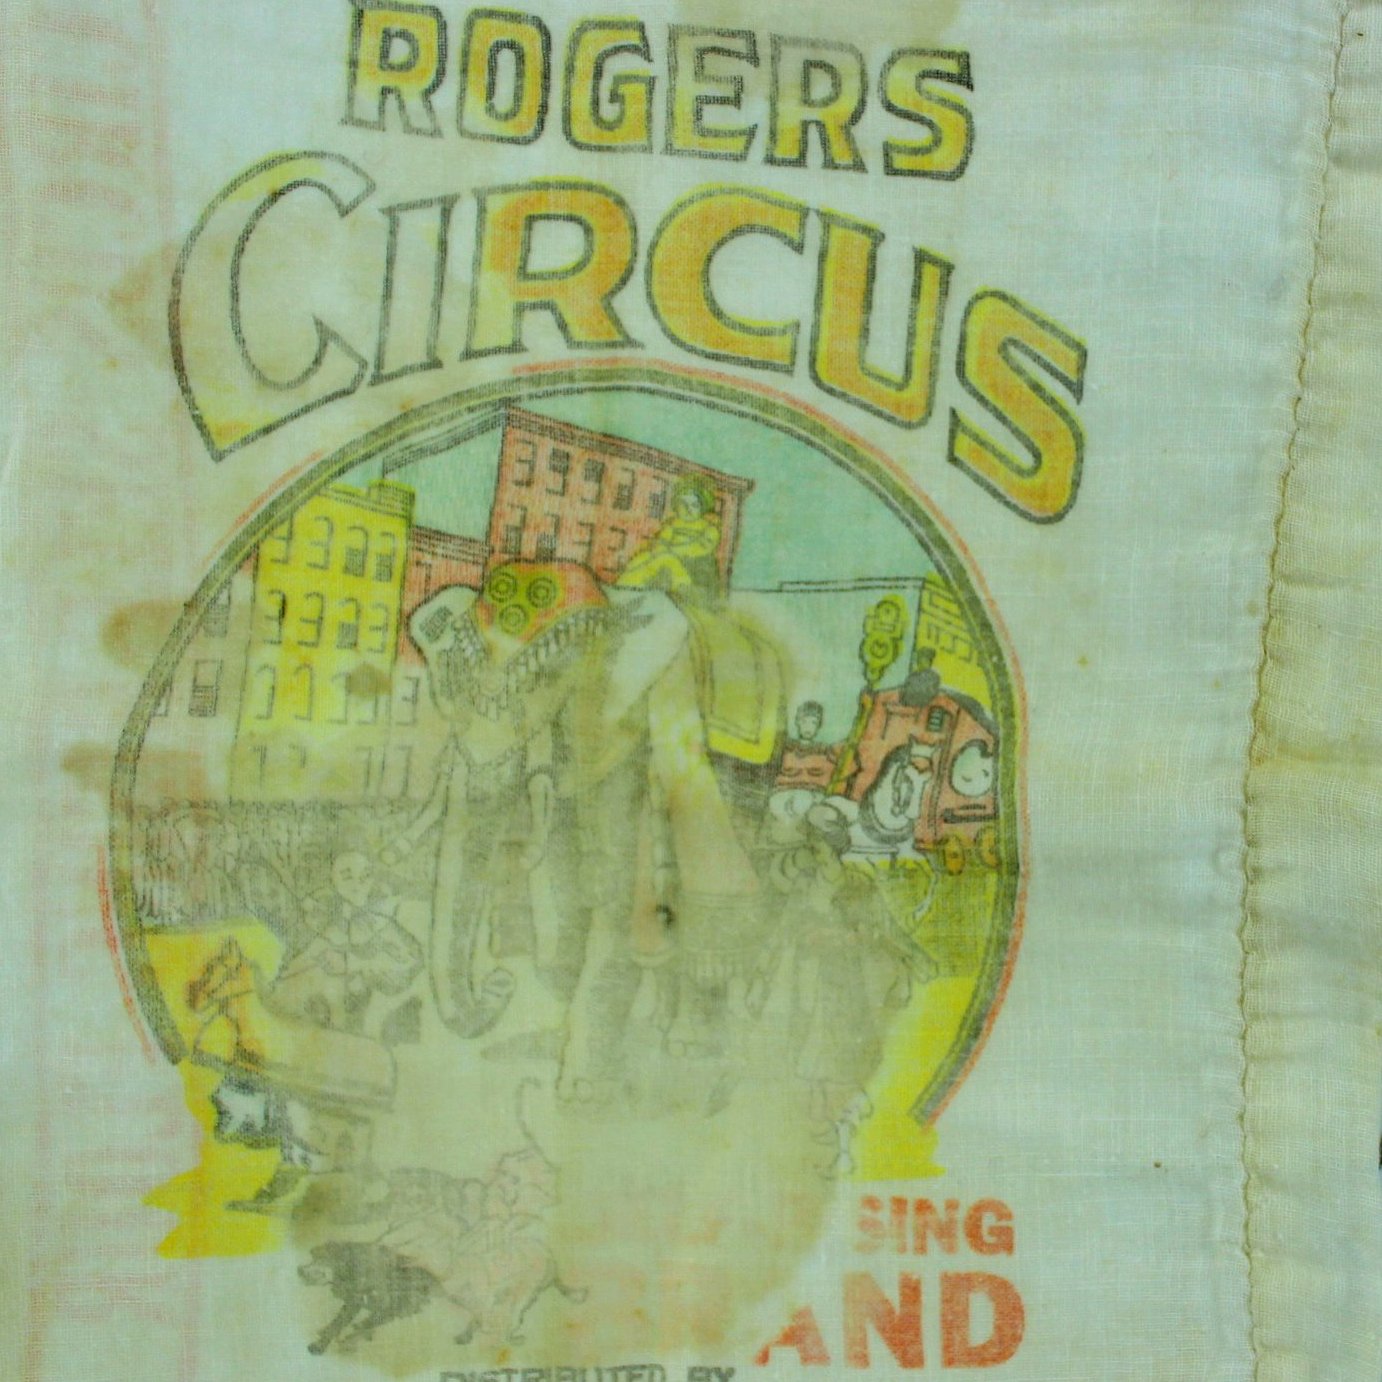 Vintage Collectible 1940s Rogers Circus Flour Bag Sack Southern Grocery Stores Atlanta 12#